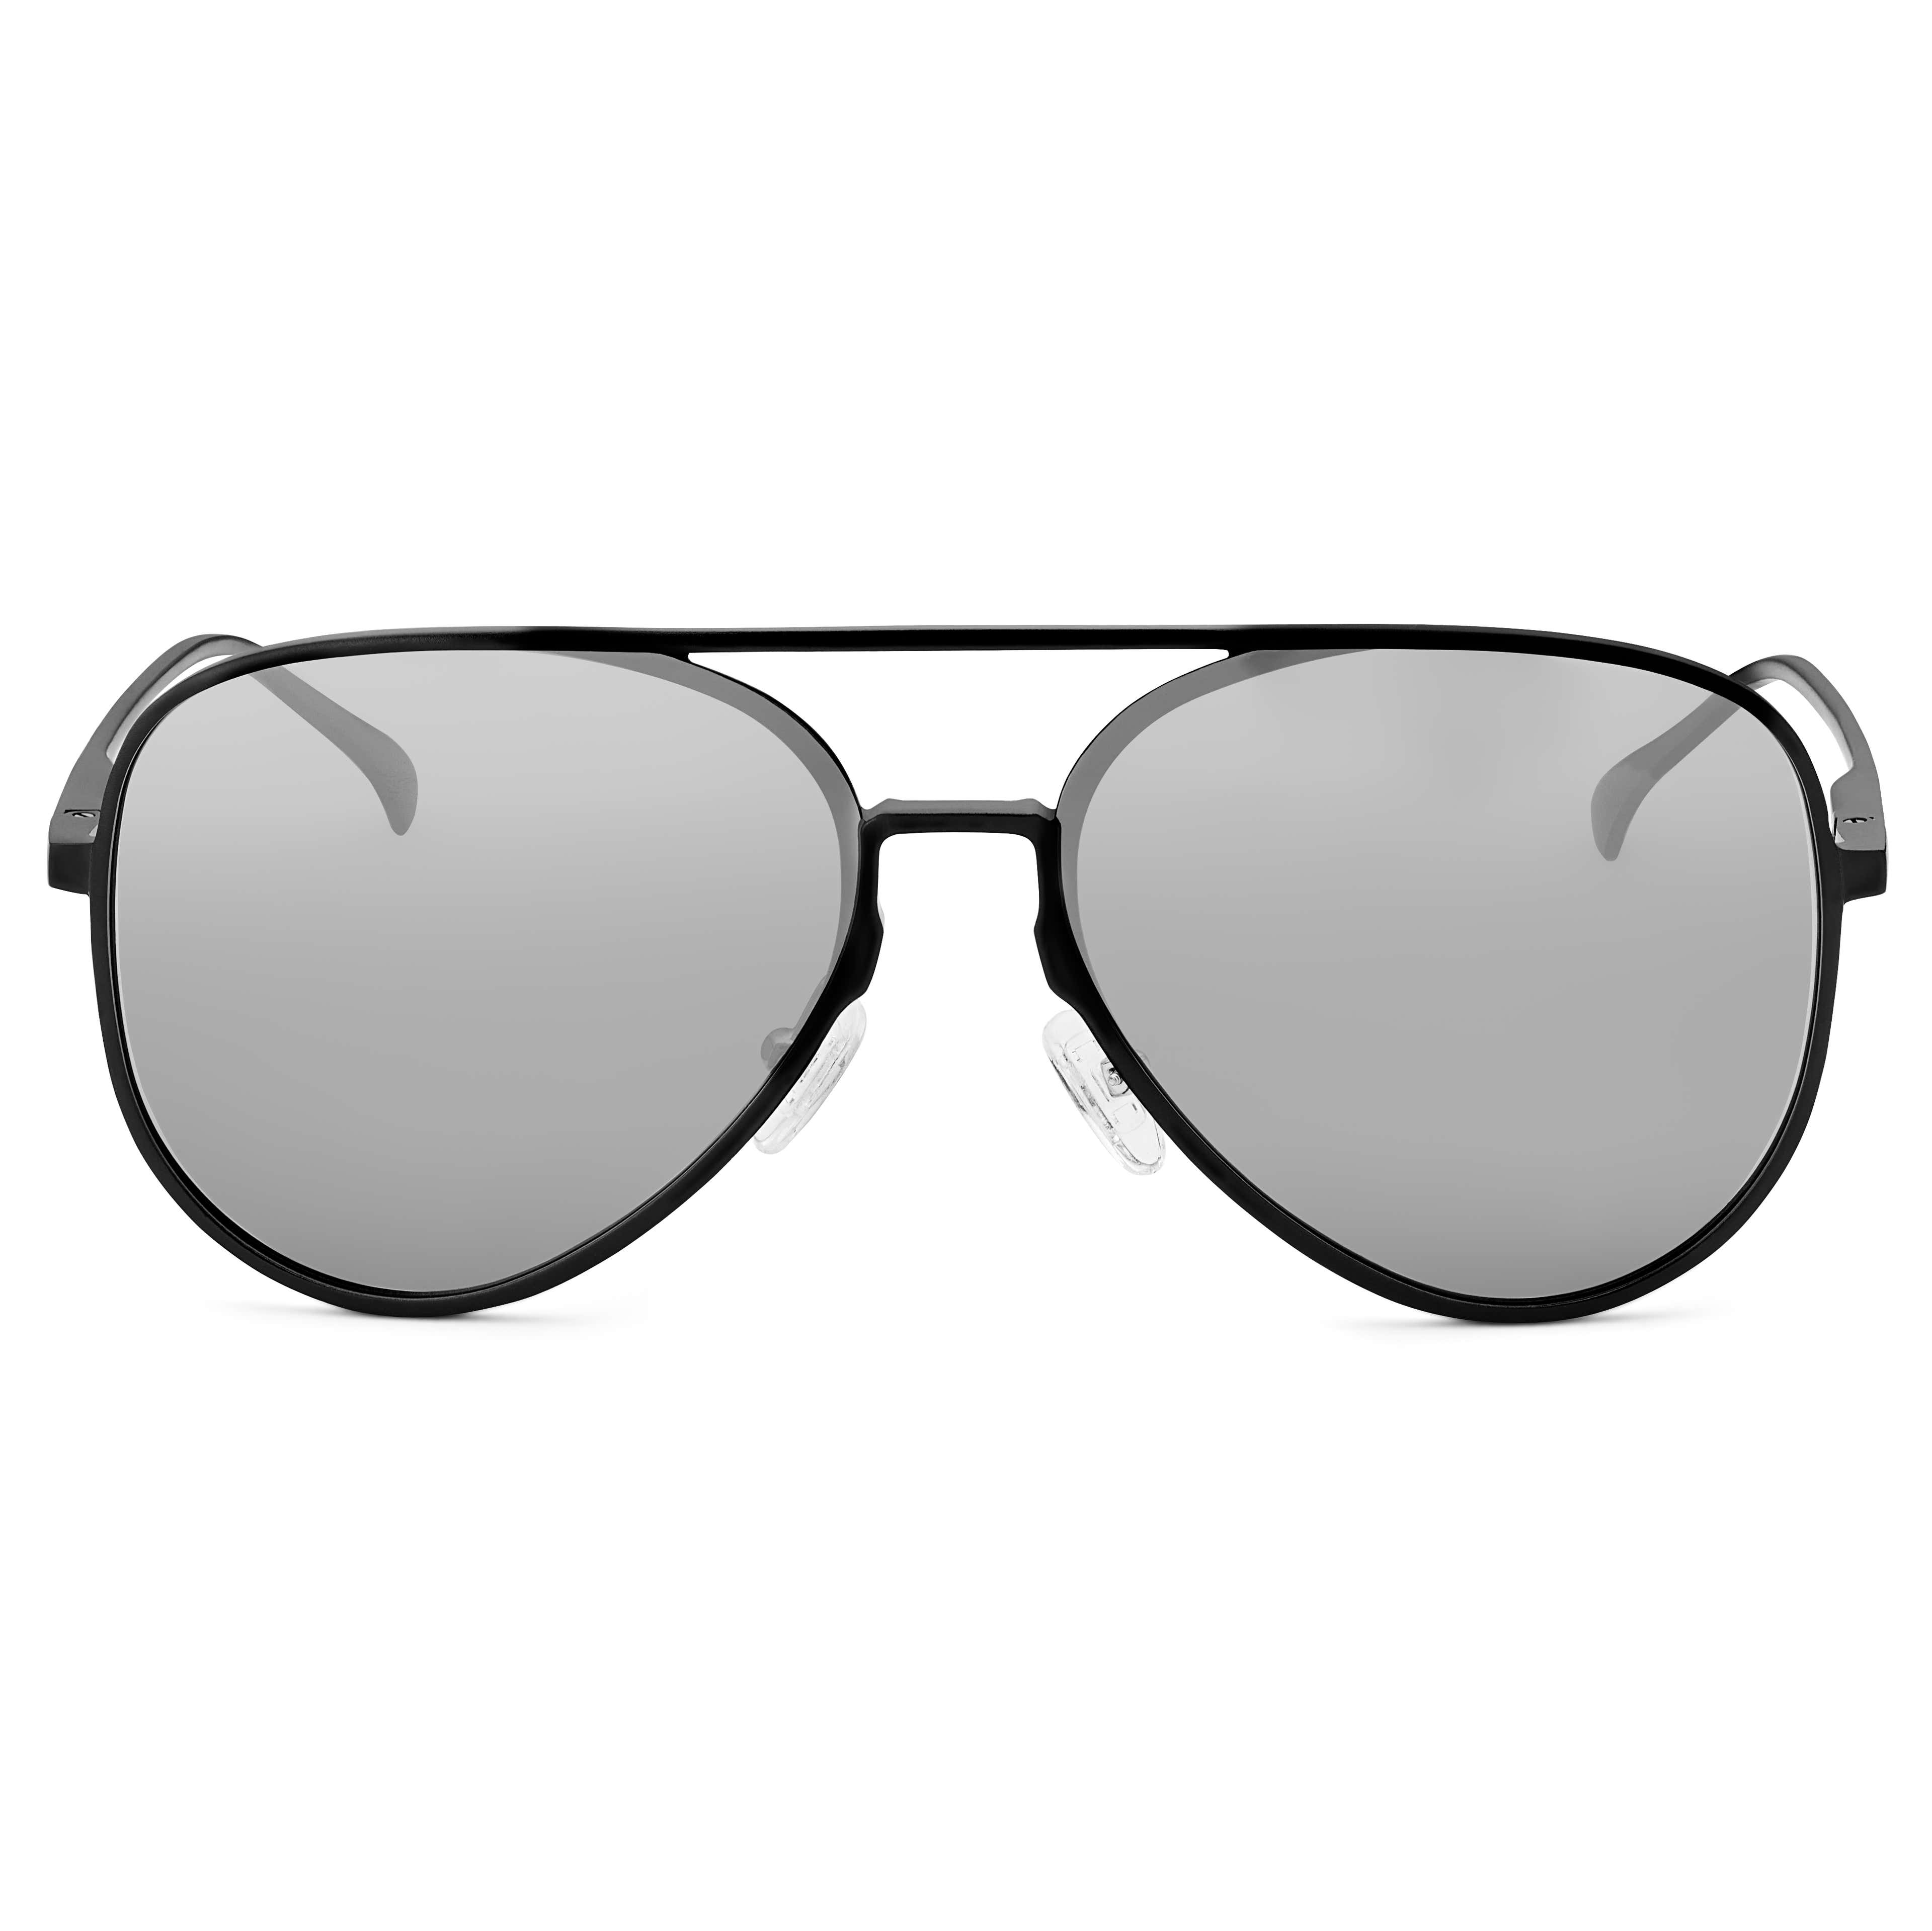 Black Mirror Polarised Aviator Sunglasses - 2 - hover gallery